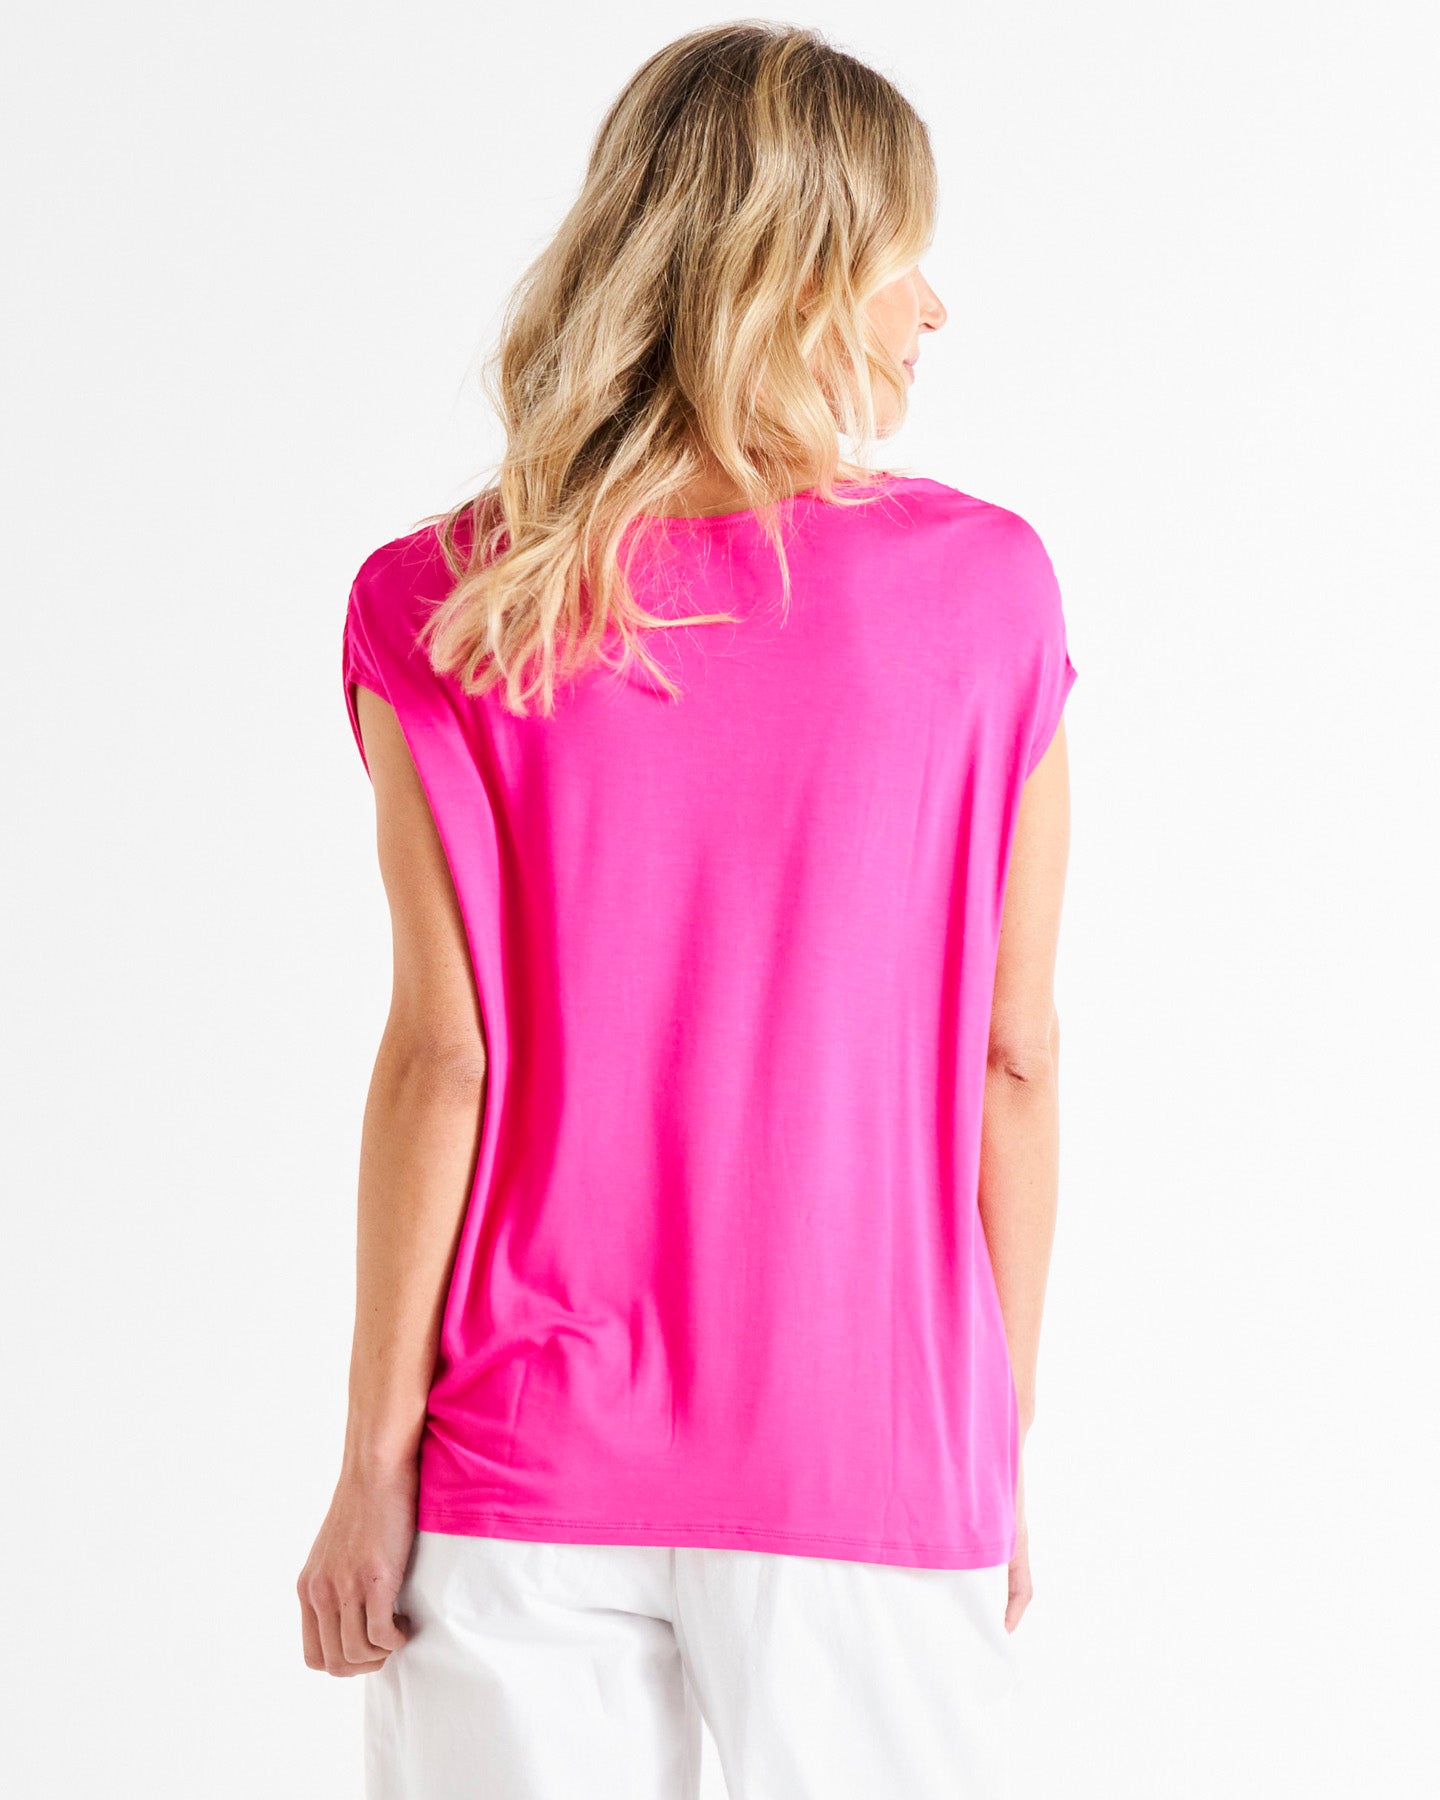 Chelsea Stretchy V-Neck Cap Sleeve Tee - Raspberry Pink